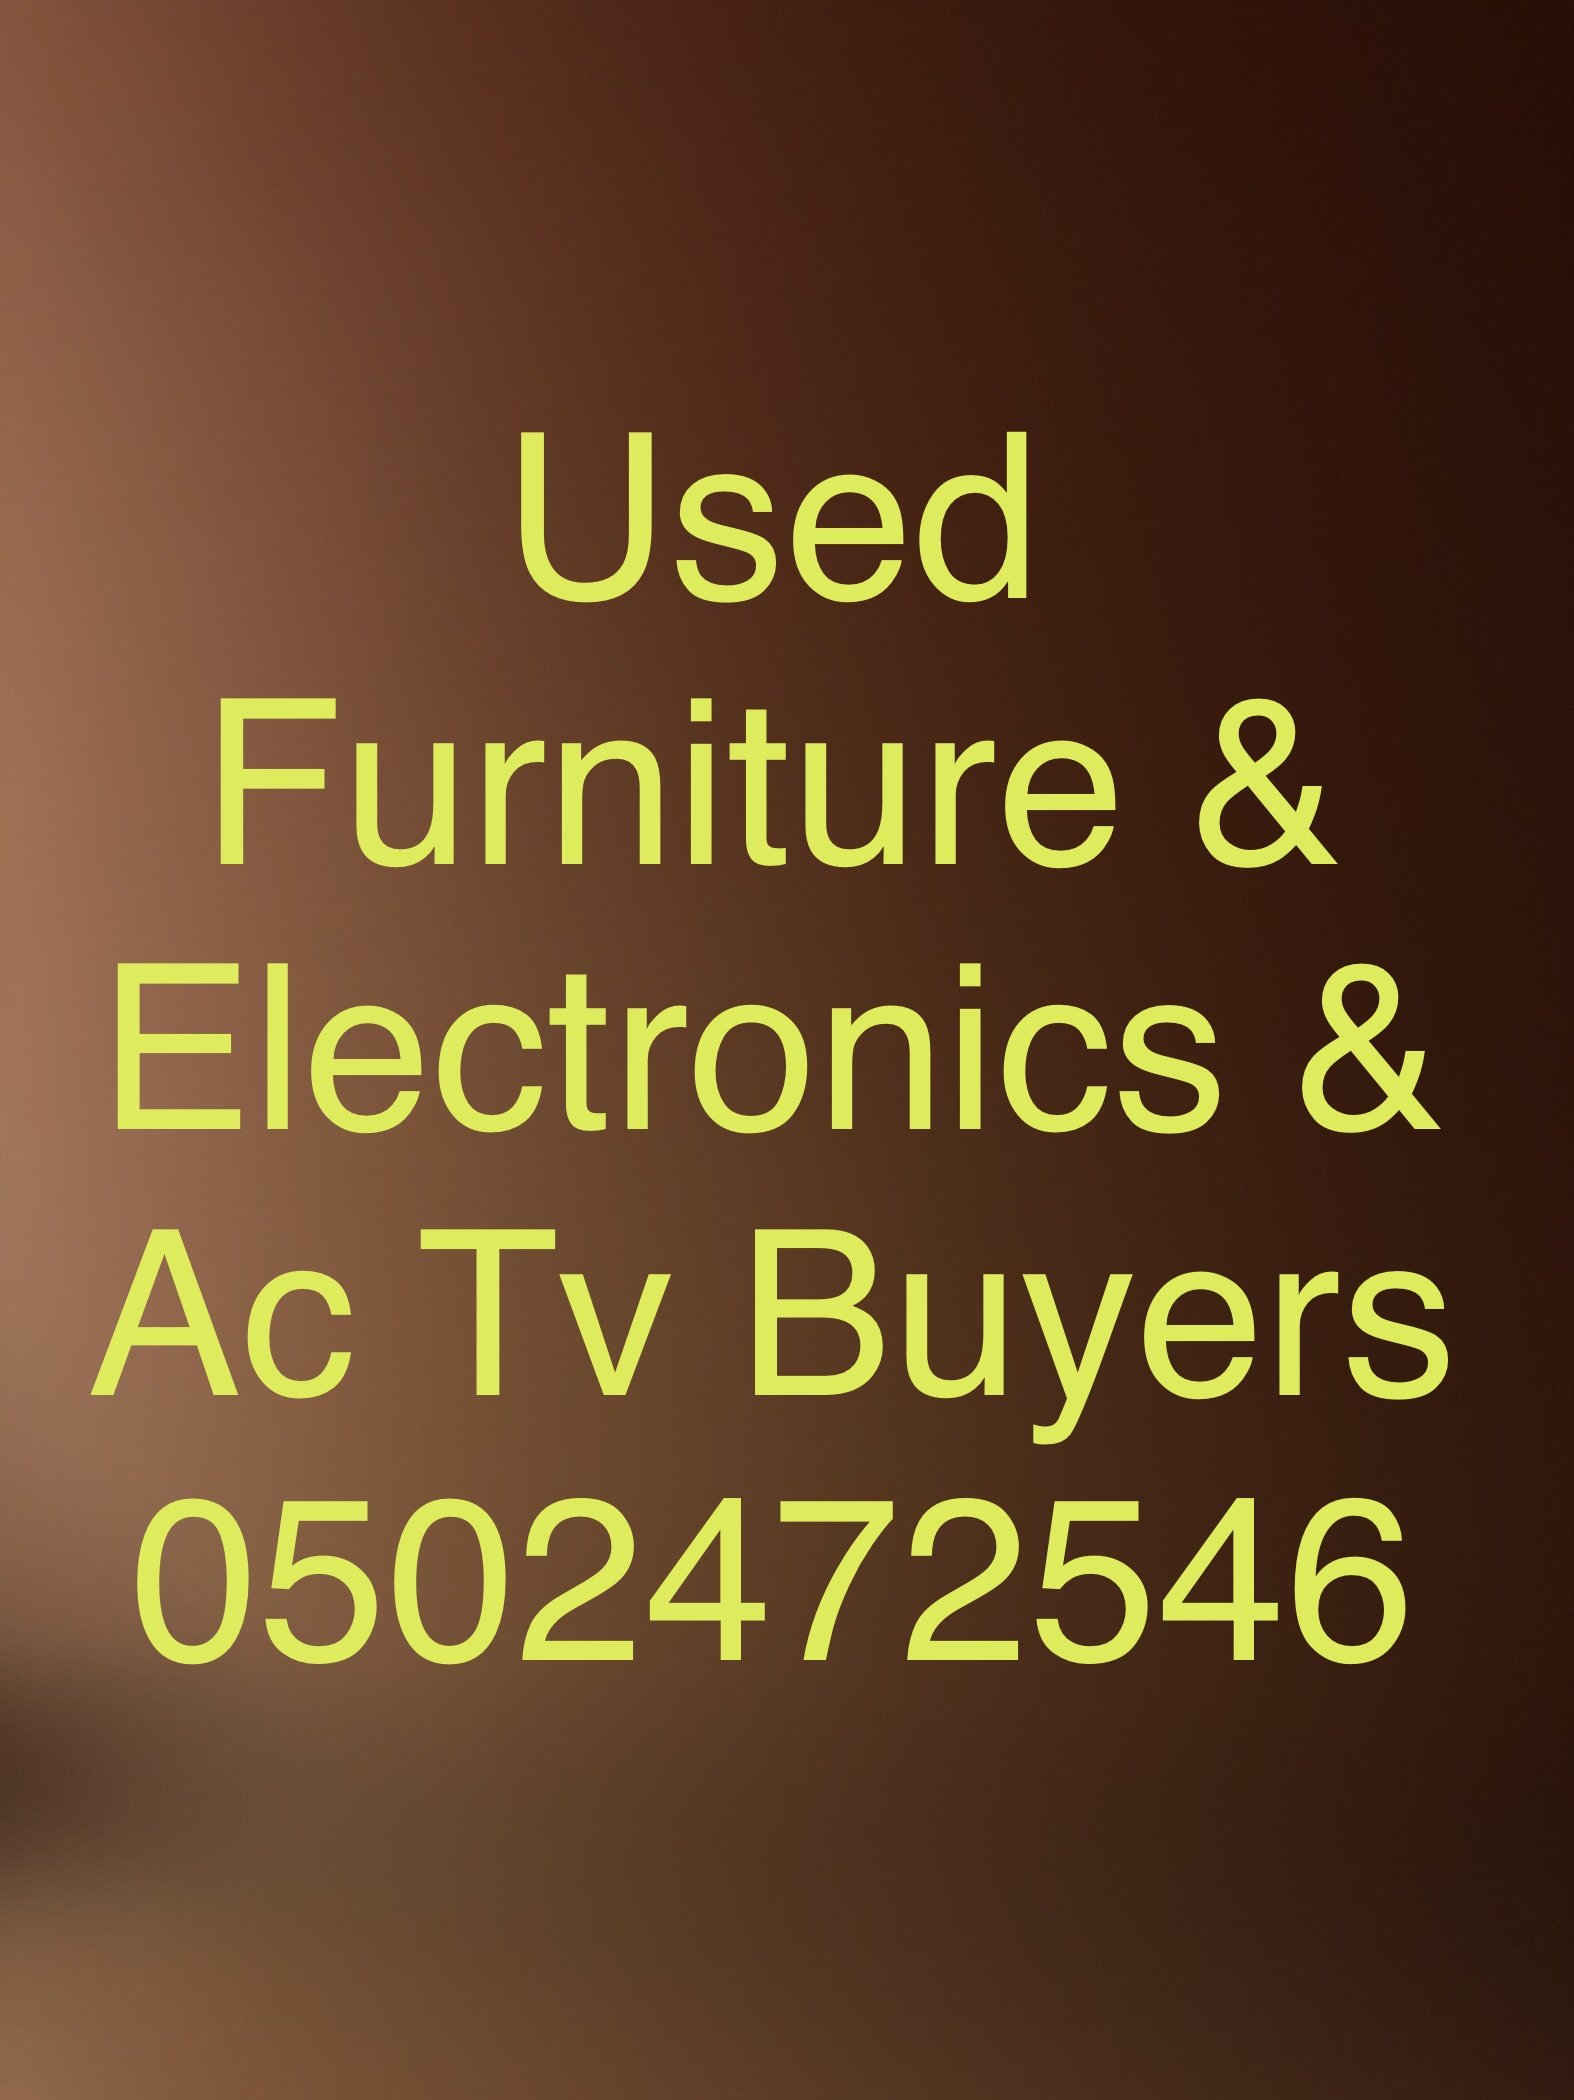 Used Ac Buyers and seller in sharjah al nahda 0502472546